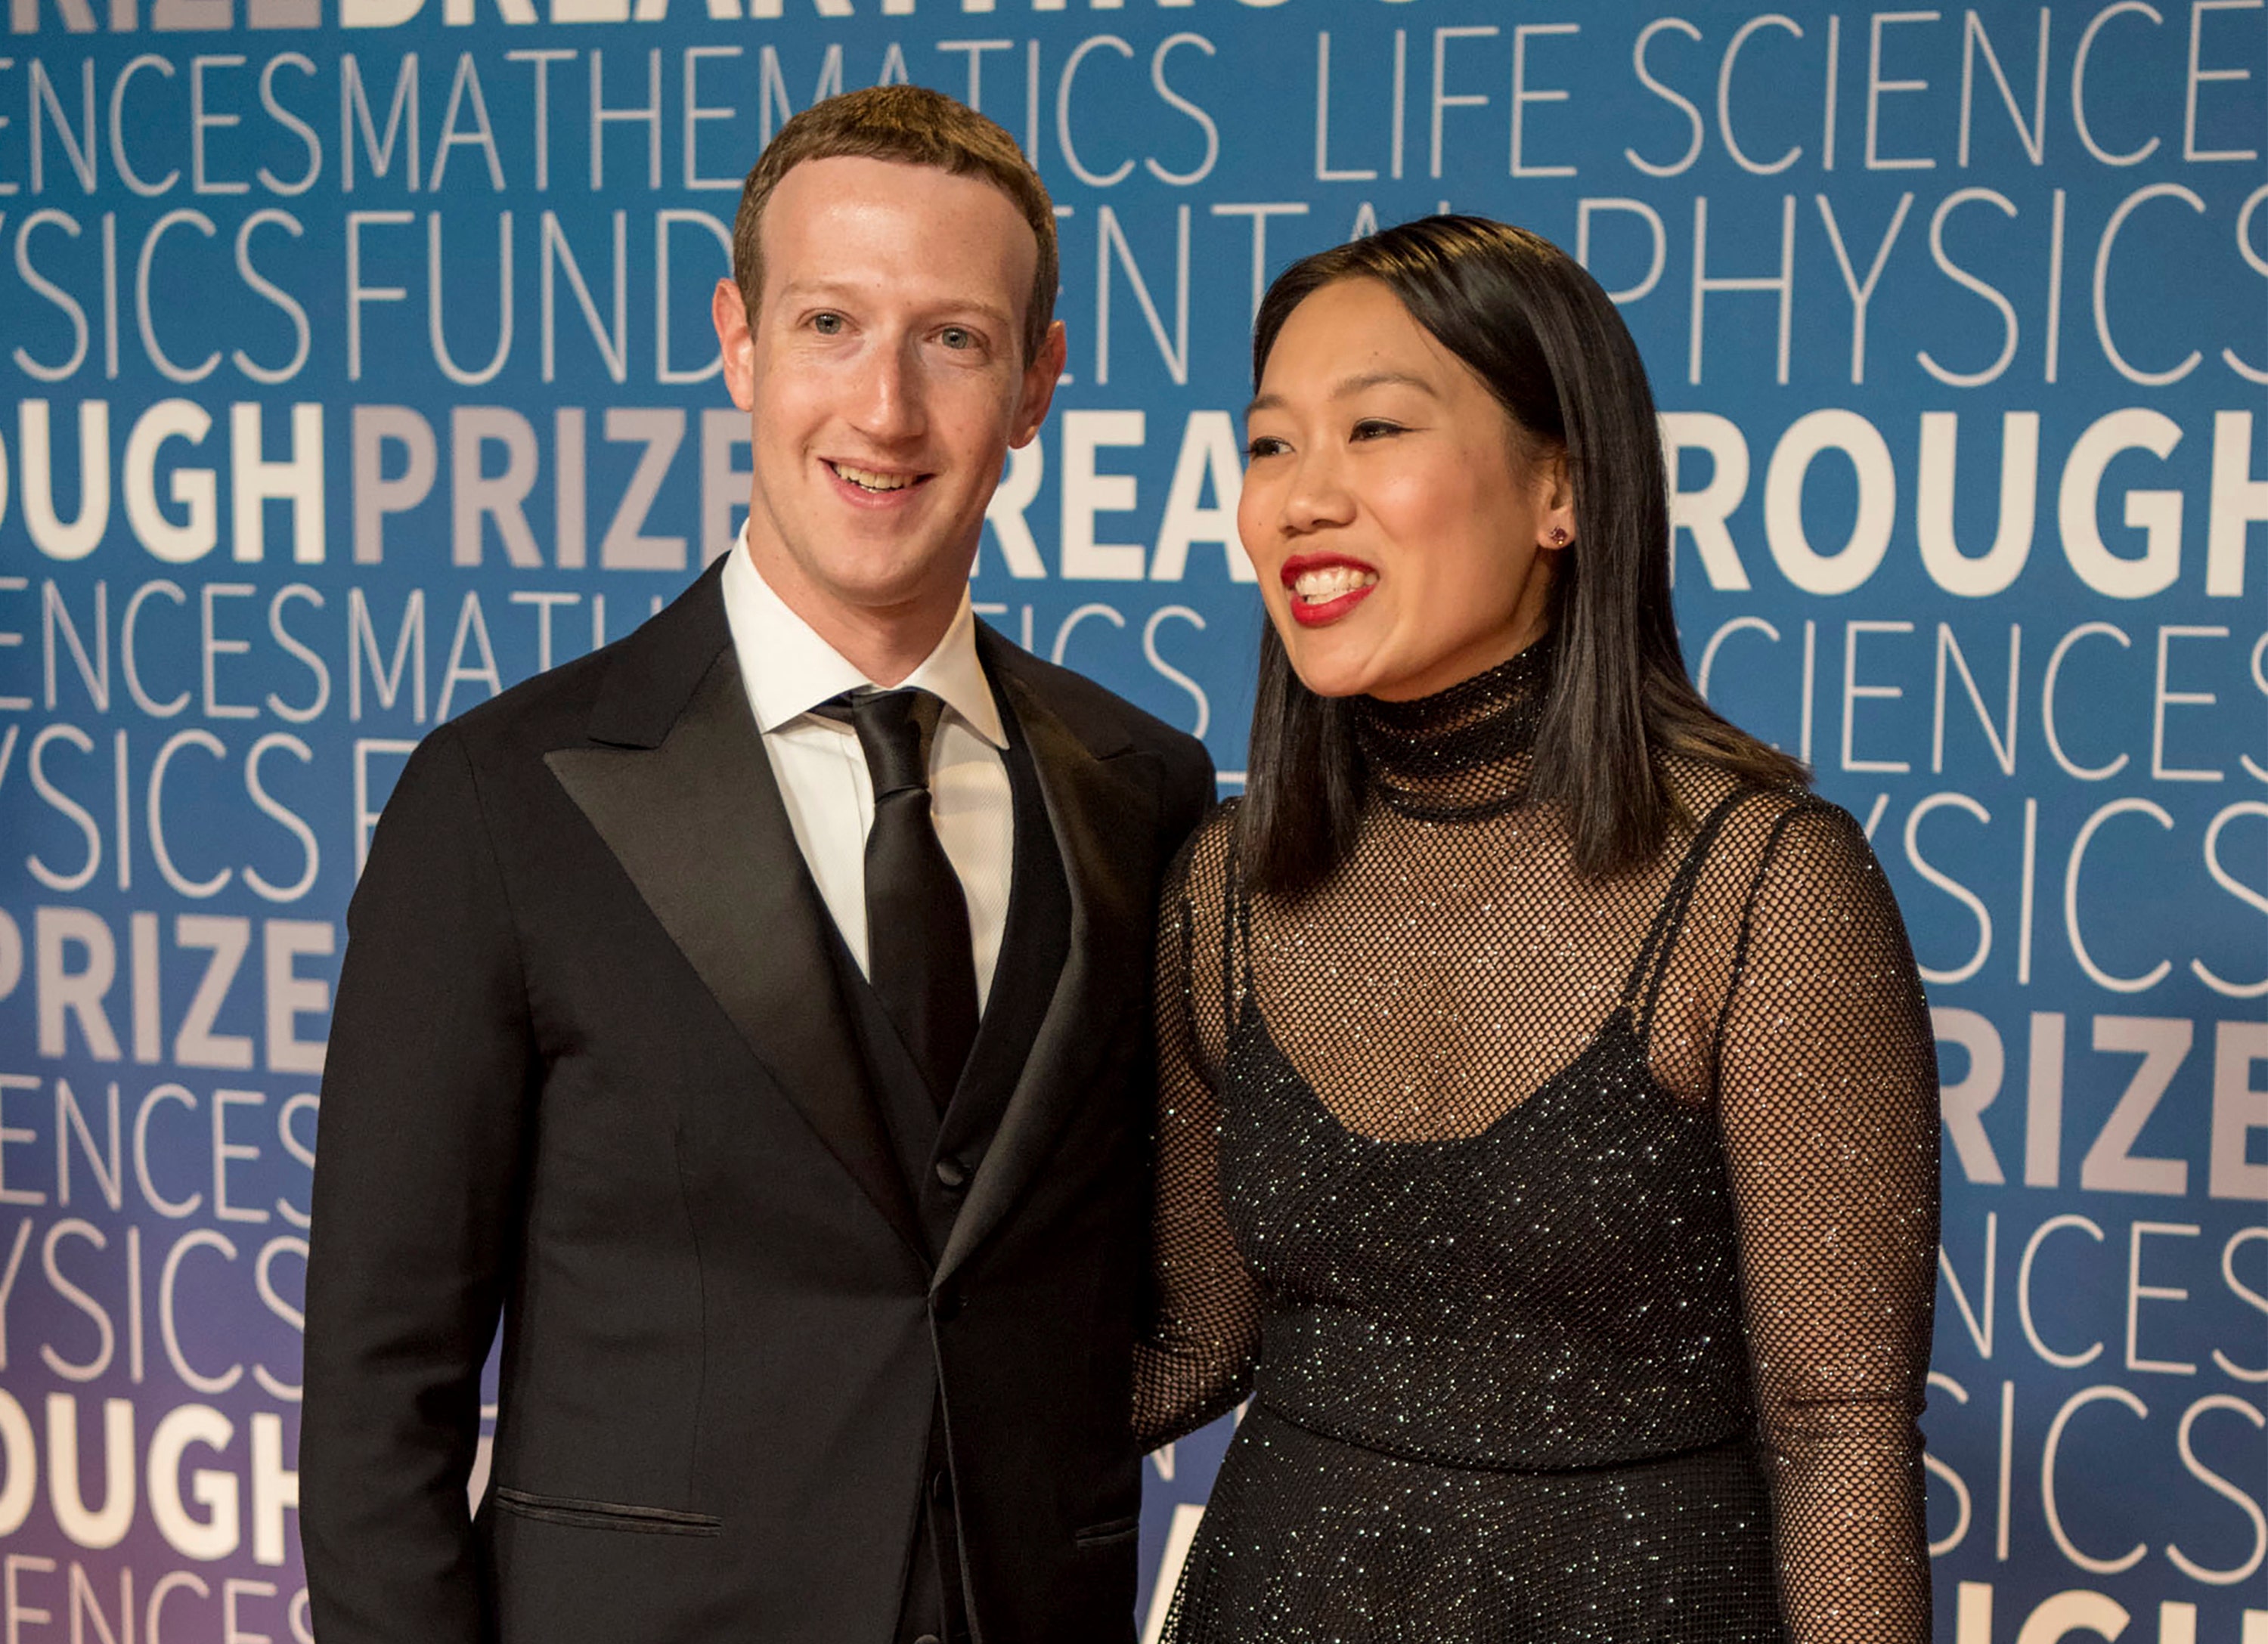 Mark Zuckerberg and wife Priscilla Chan invest $3.4B for science advances